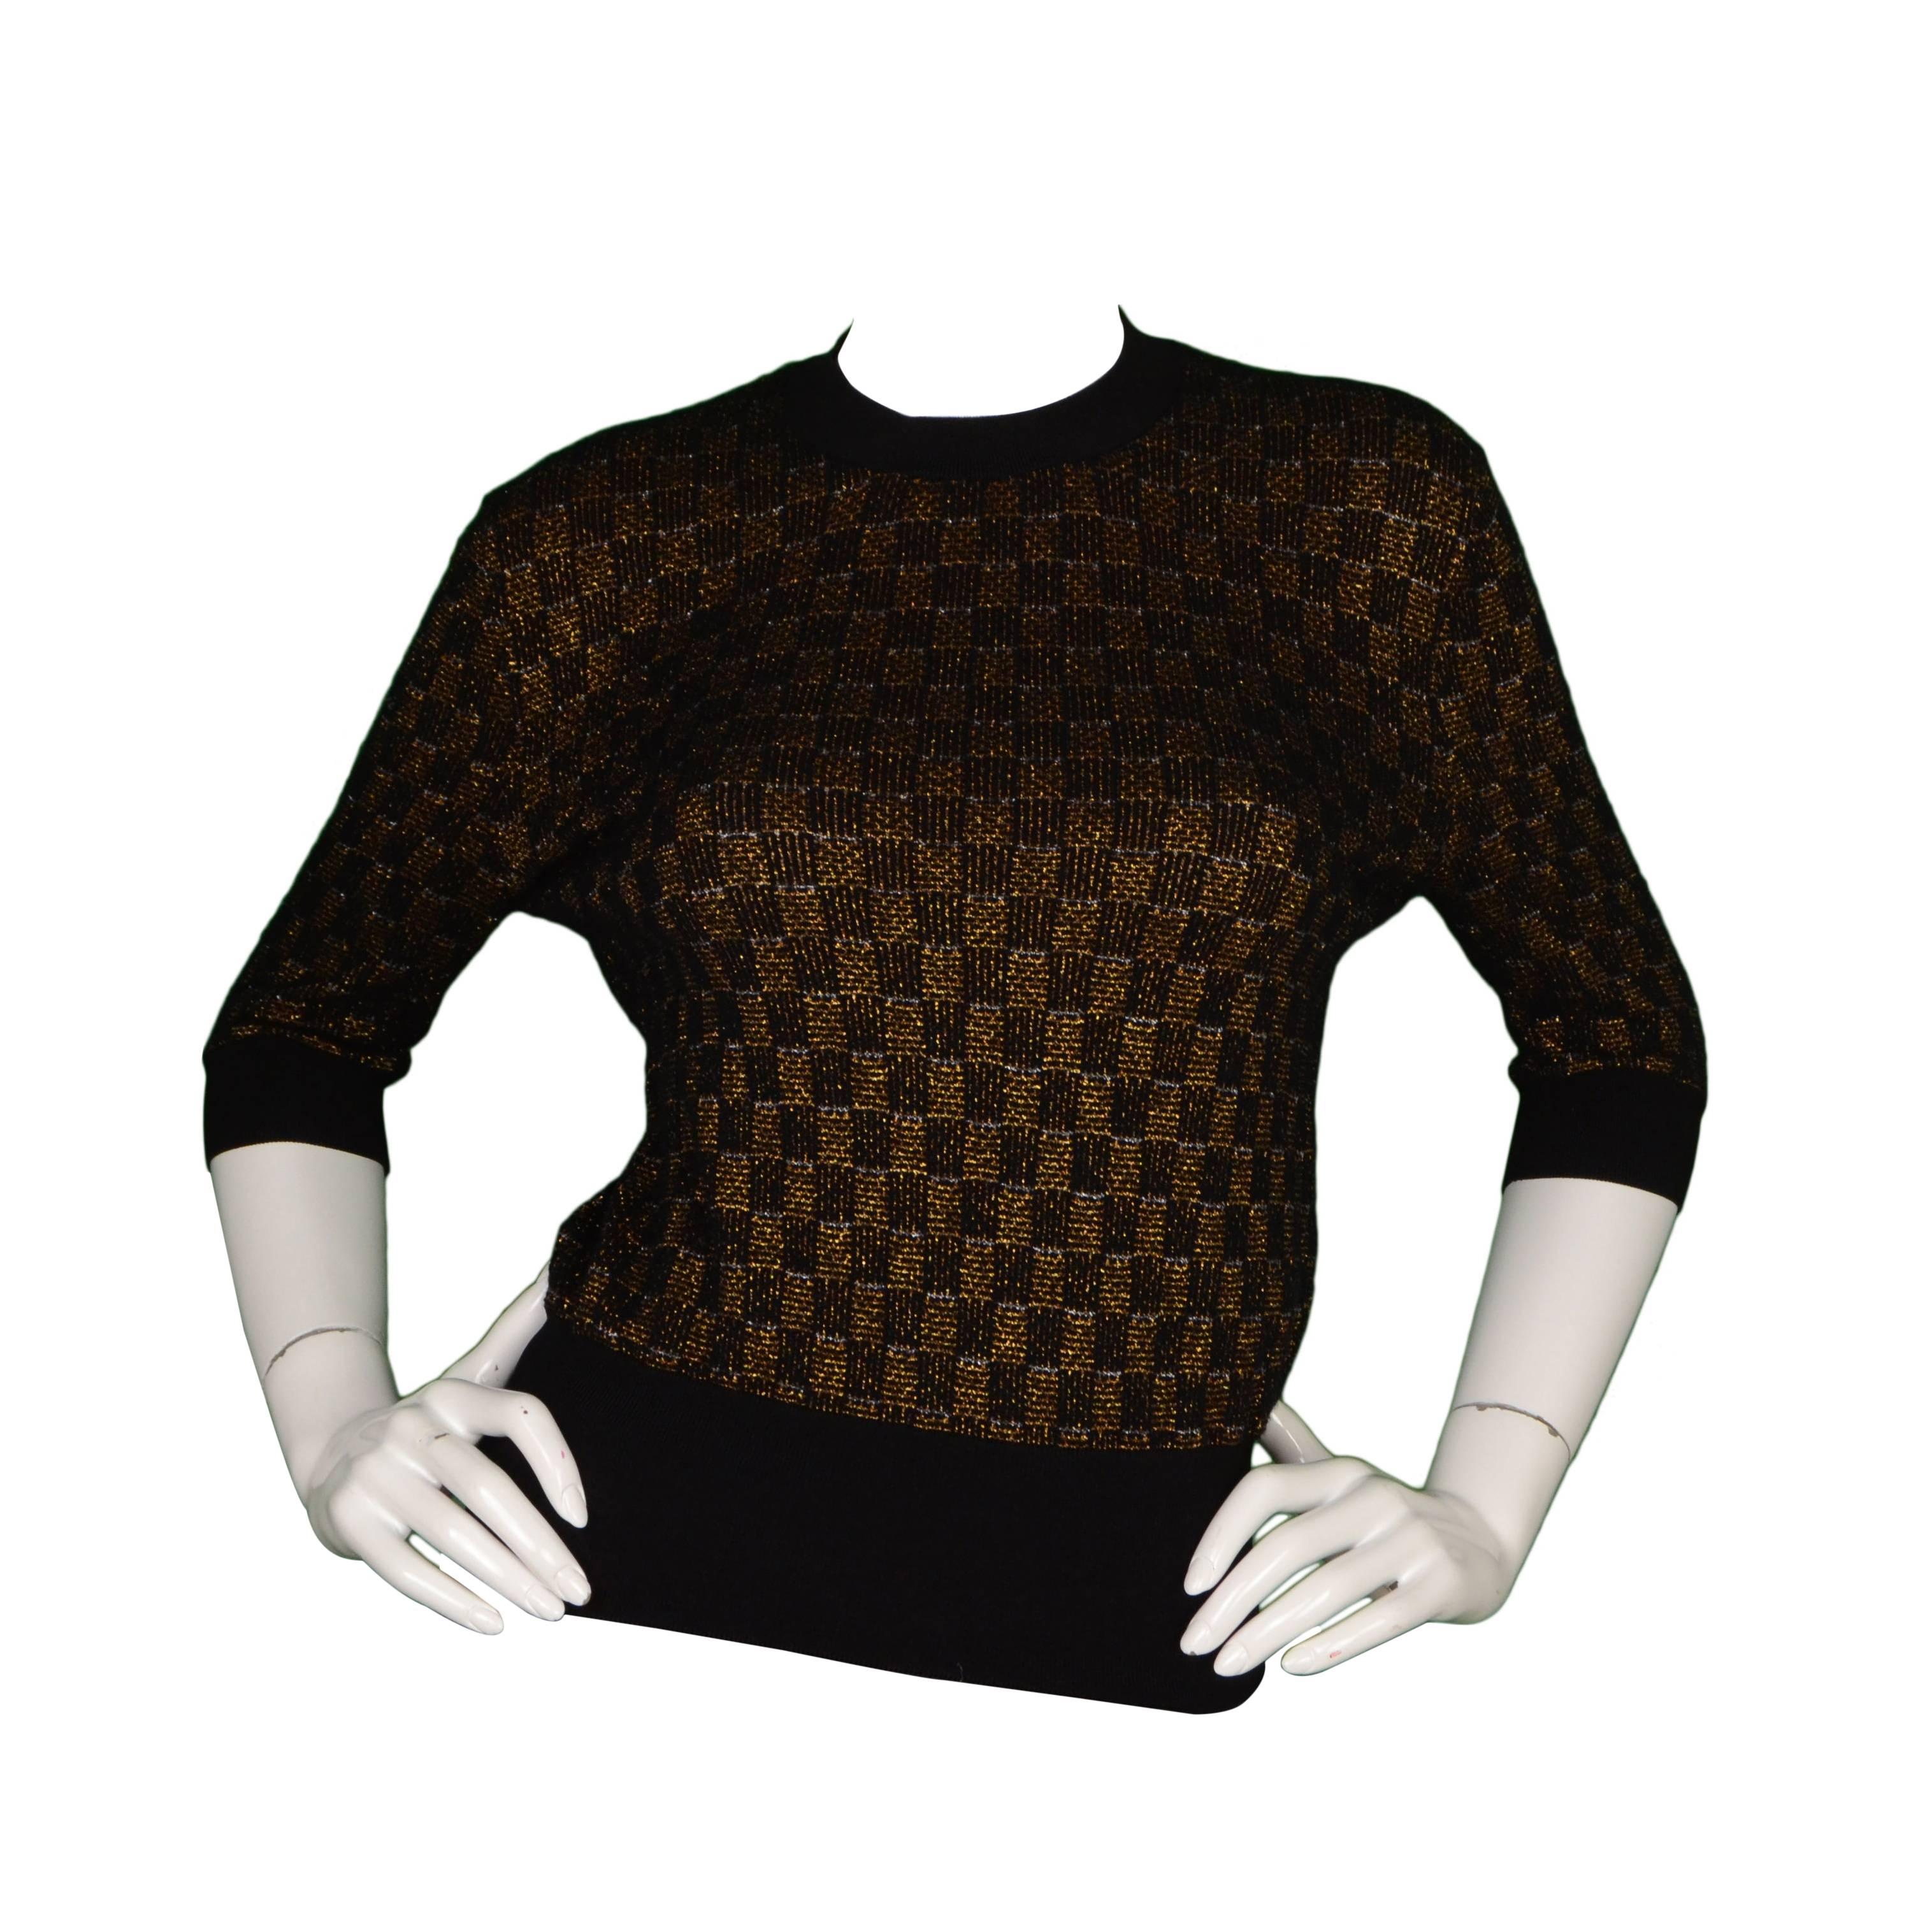 Louis Vuitton Black & Gold Knit Short Sleeve Top sz S